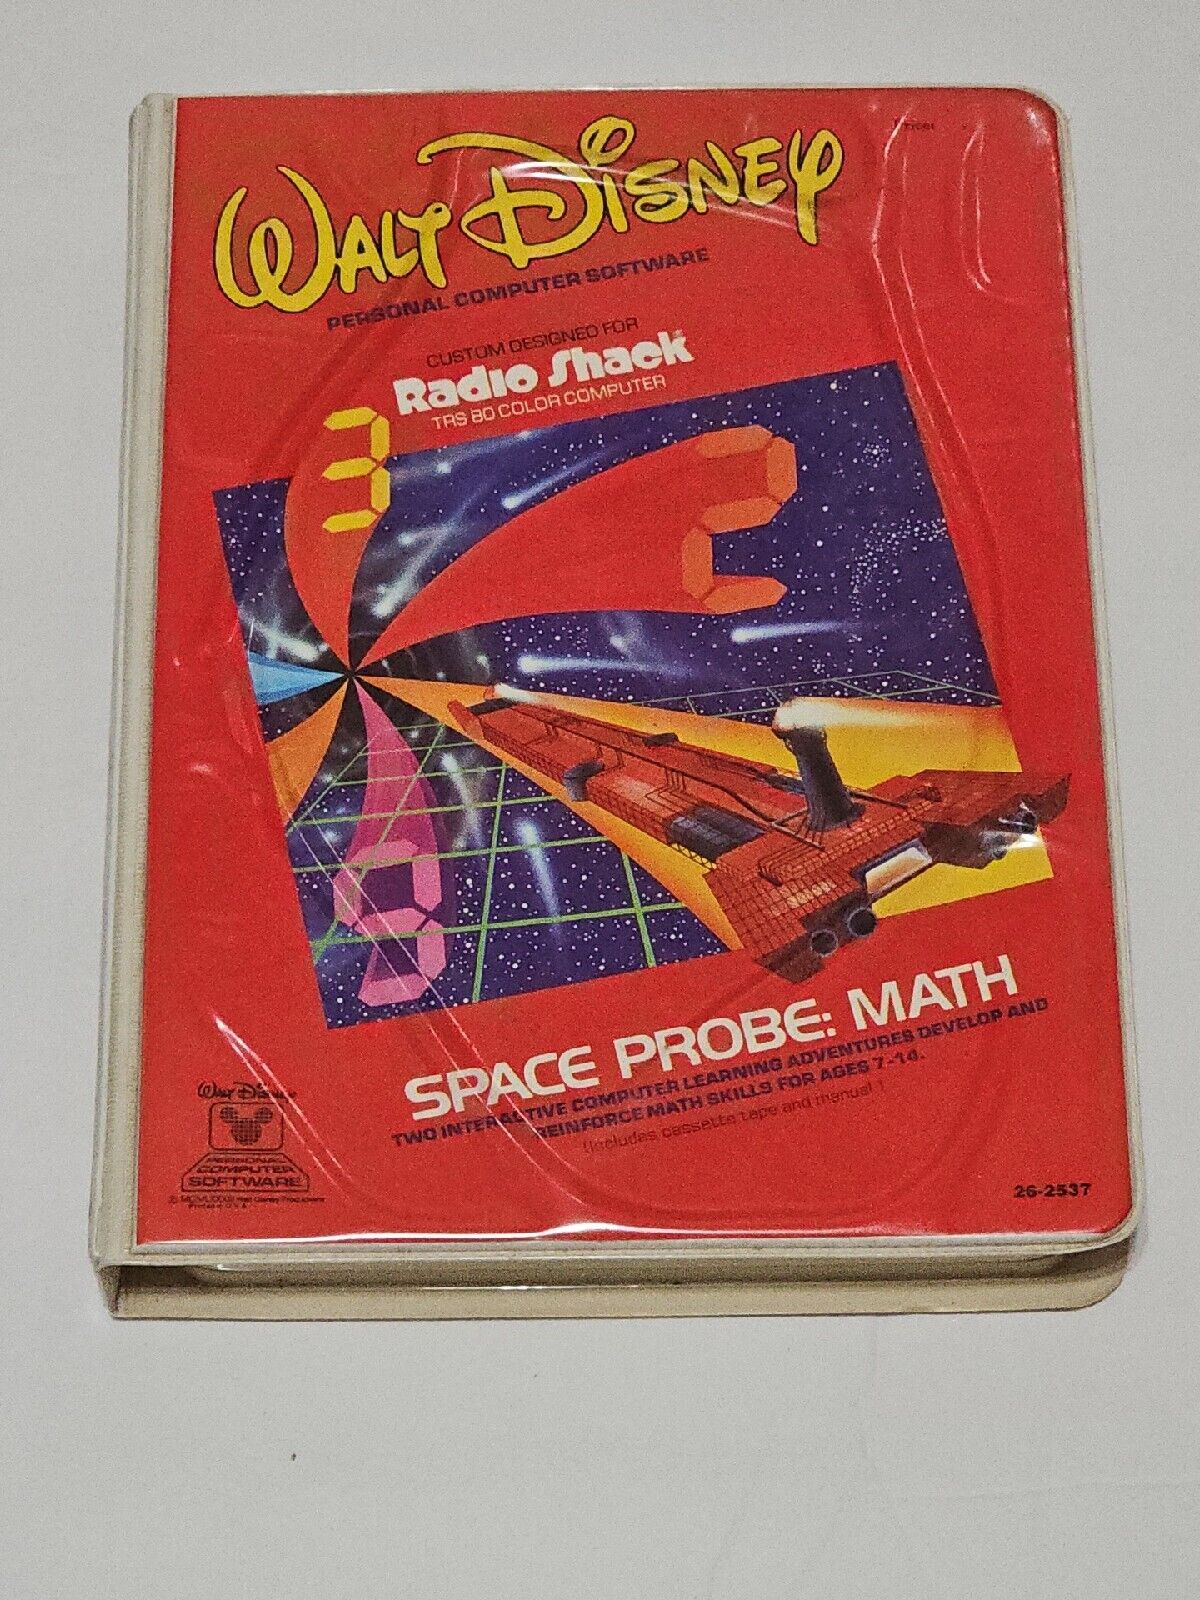 Walt Disney Space Probe Math Cat 26-2537 Radio Shack Color Computer